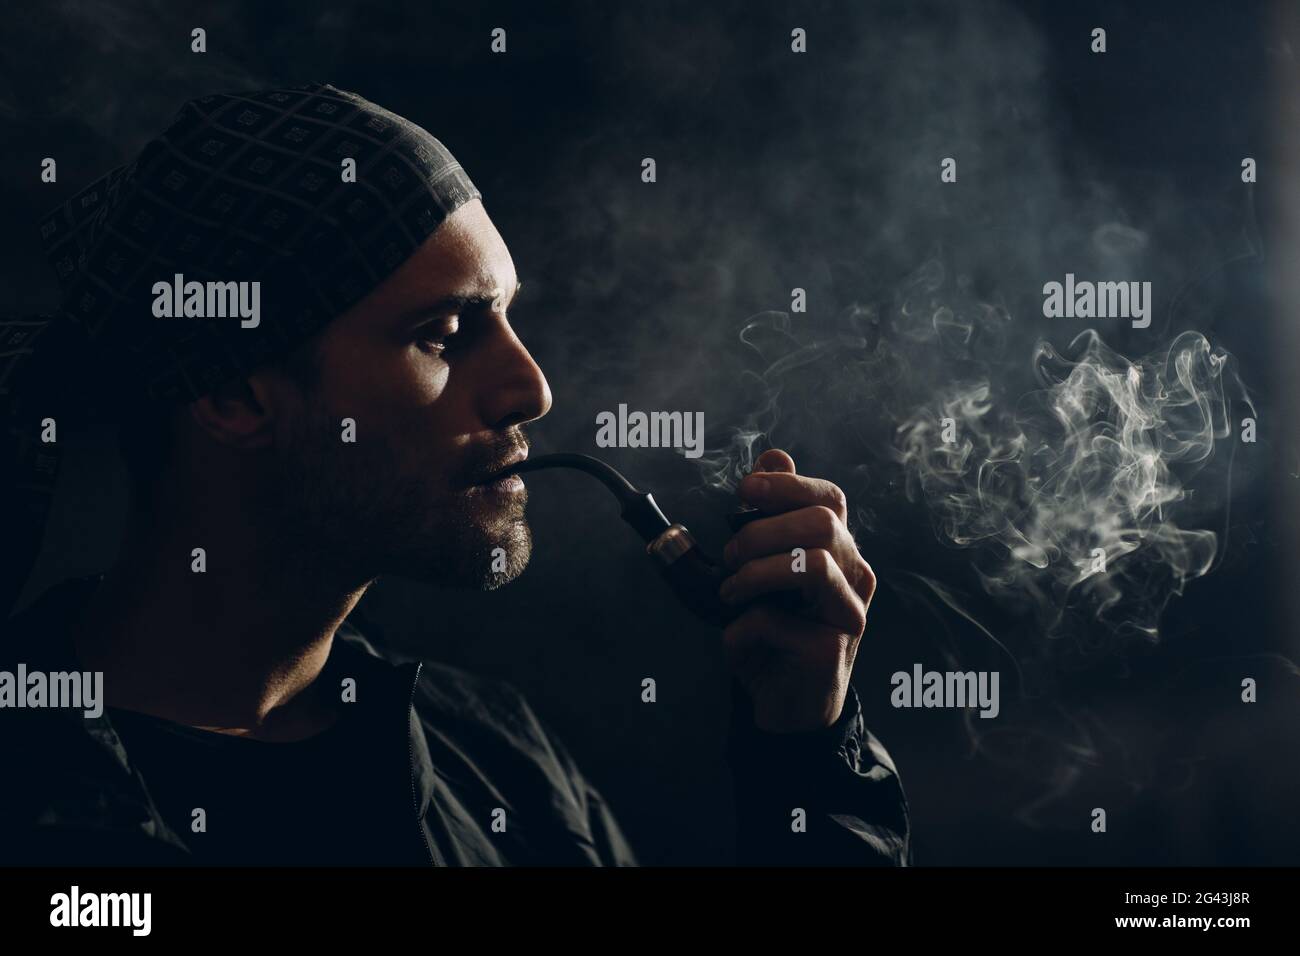 Man smoking a pipe on dark background. Back lit profile portrait Stock  Photo - Alamy